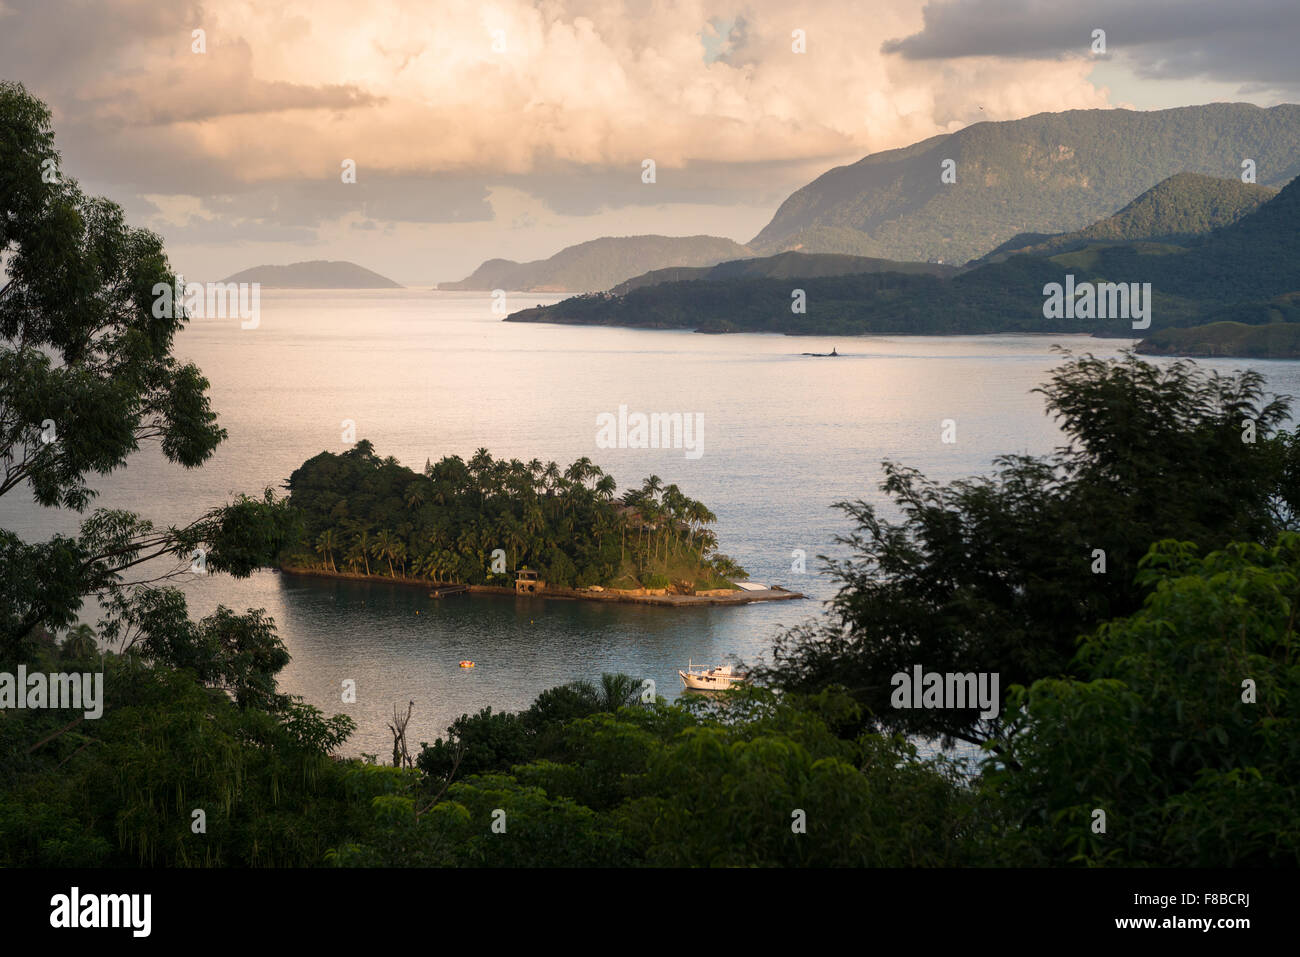 View of the island Ilha das Cabras, Ilhabela, Brazil Stock Photo